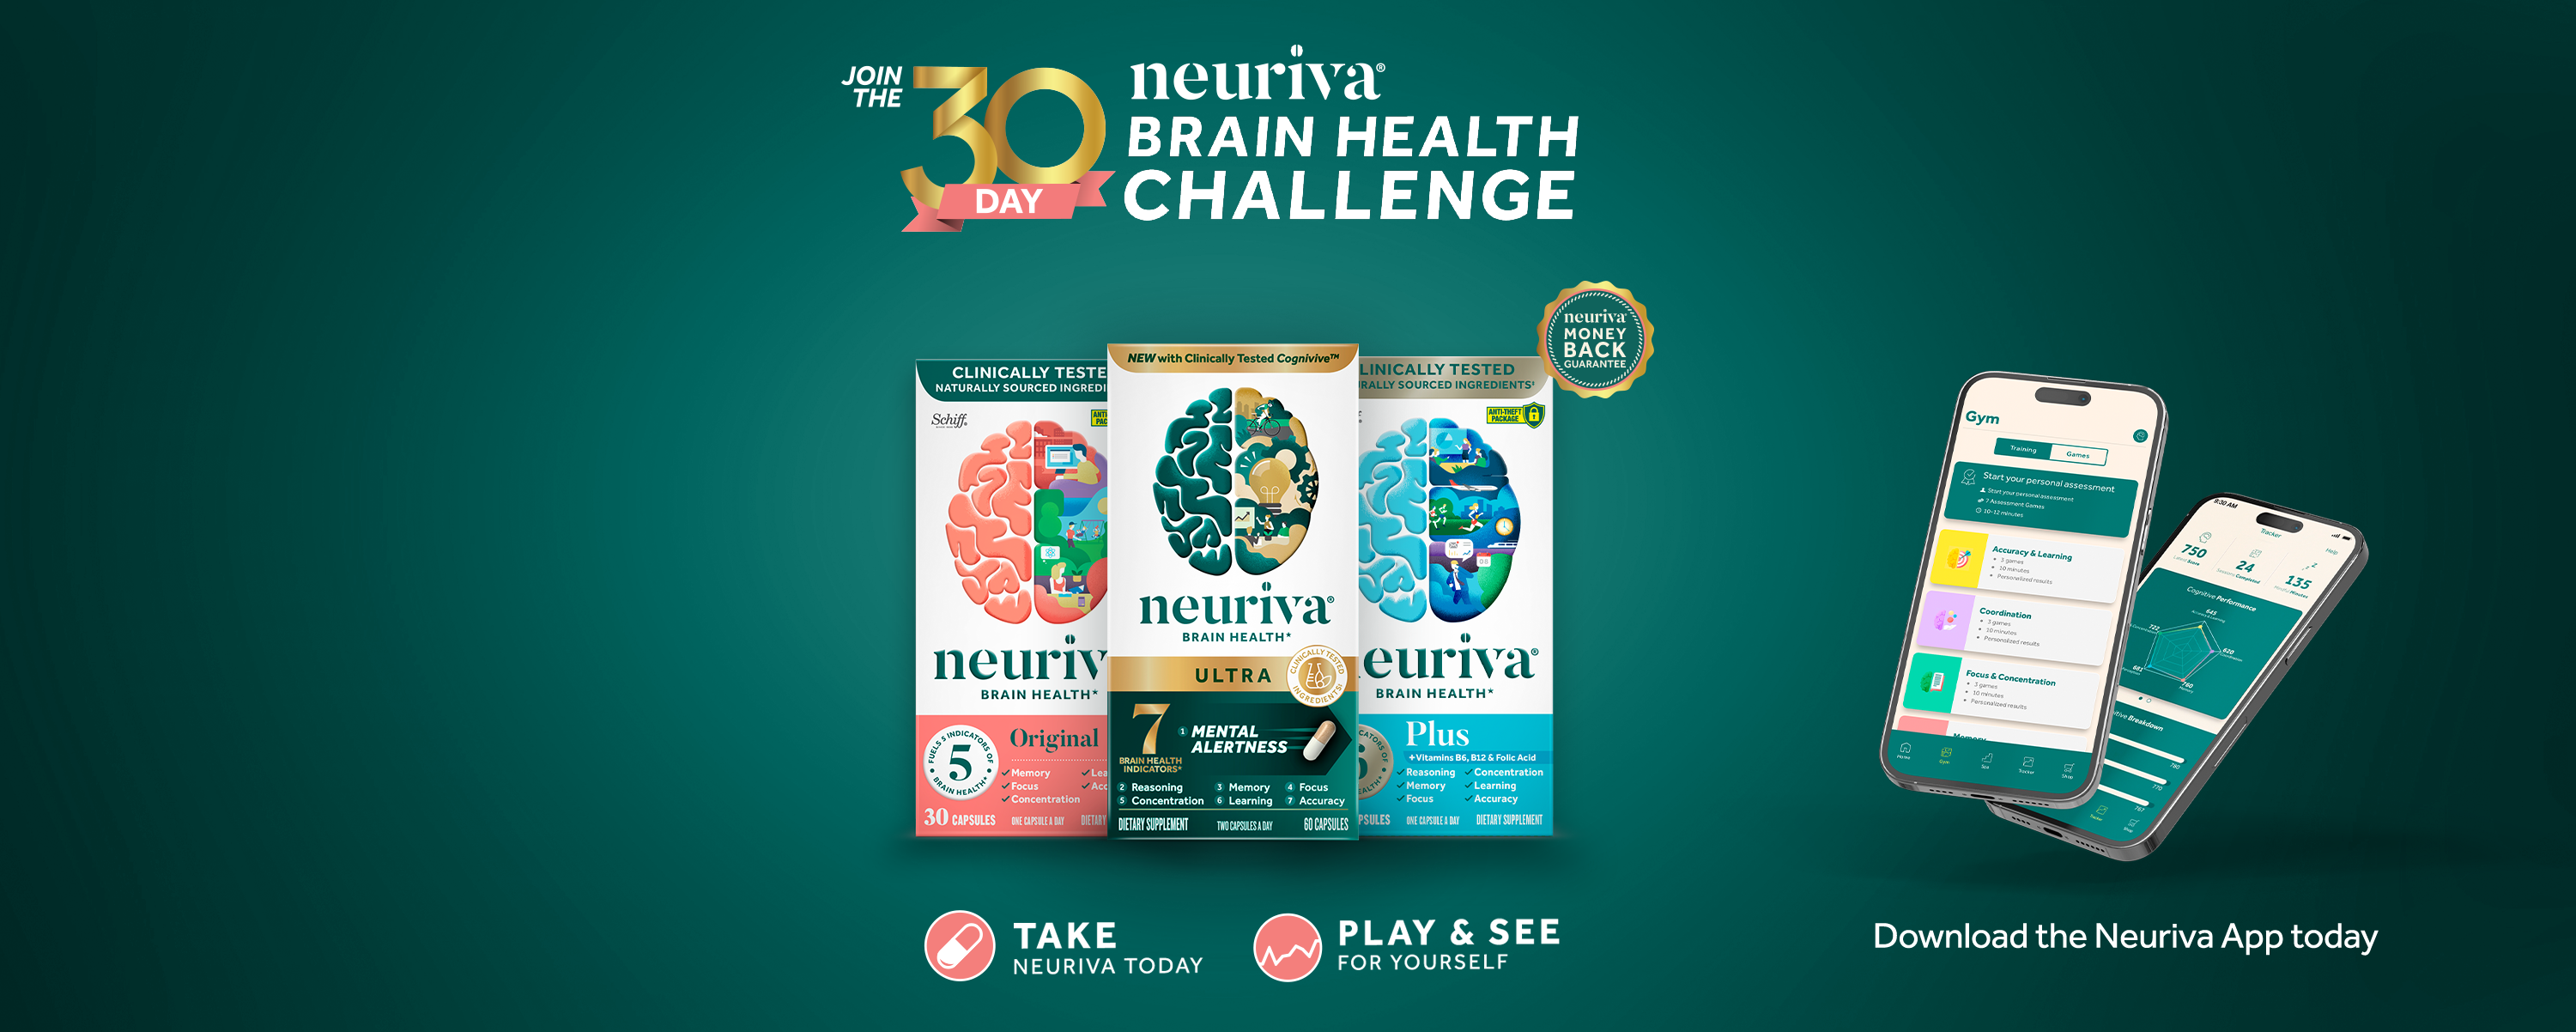 Join 30 day neuriva brain health challenge.